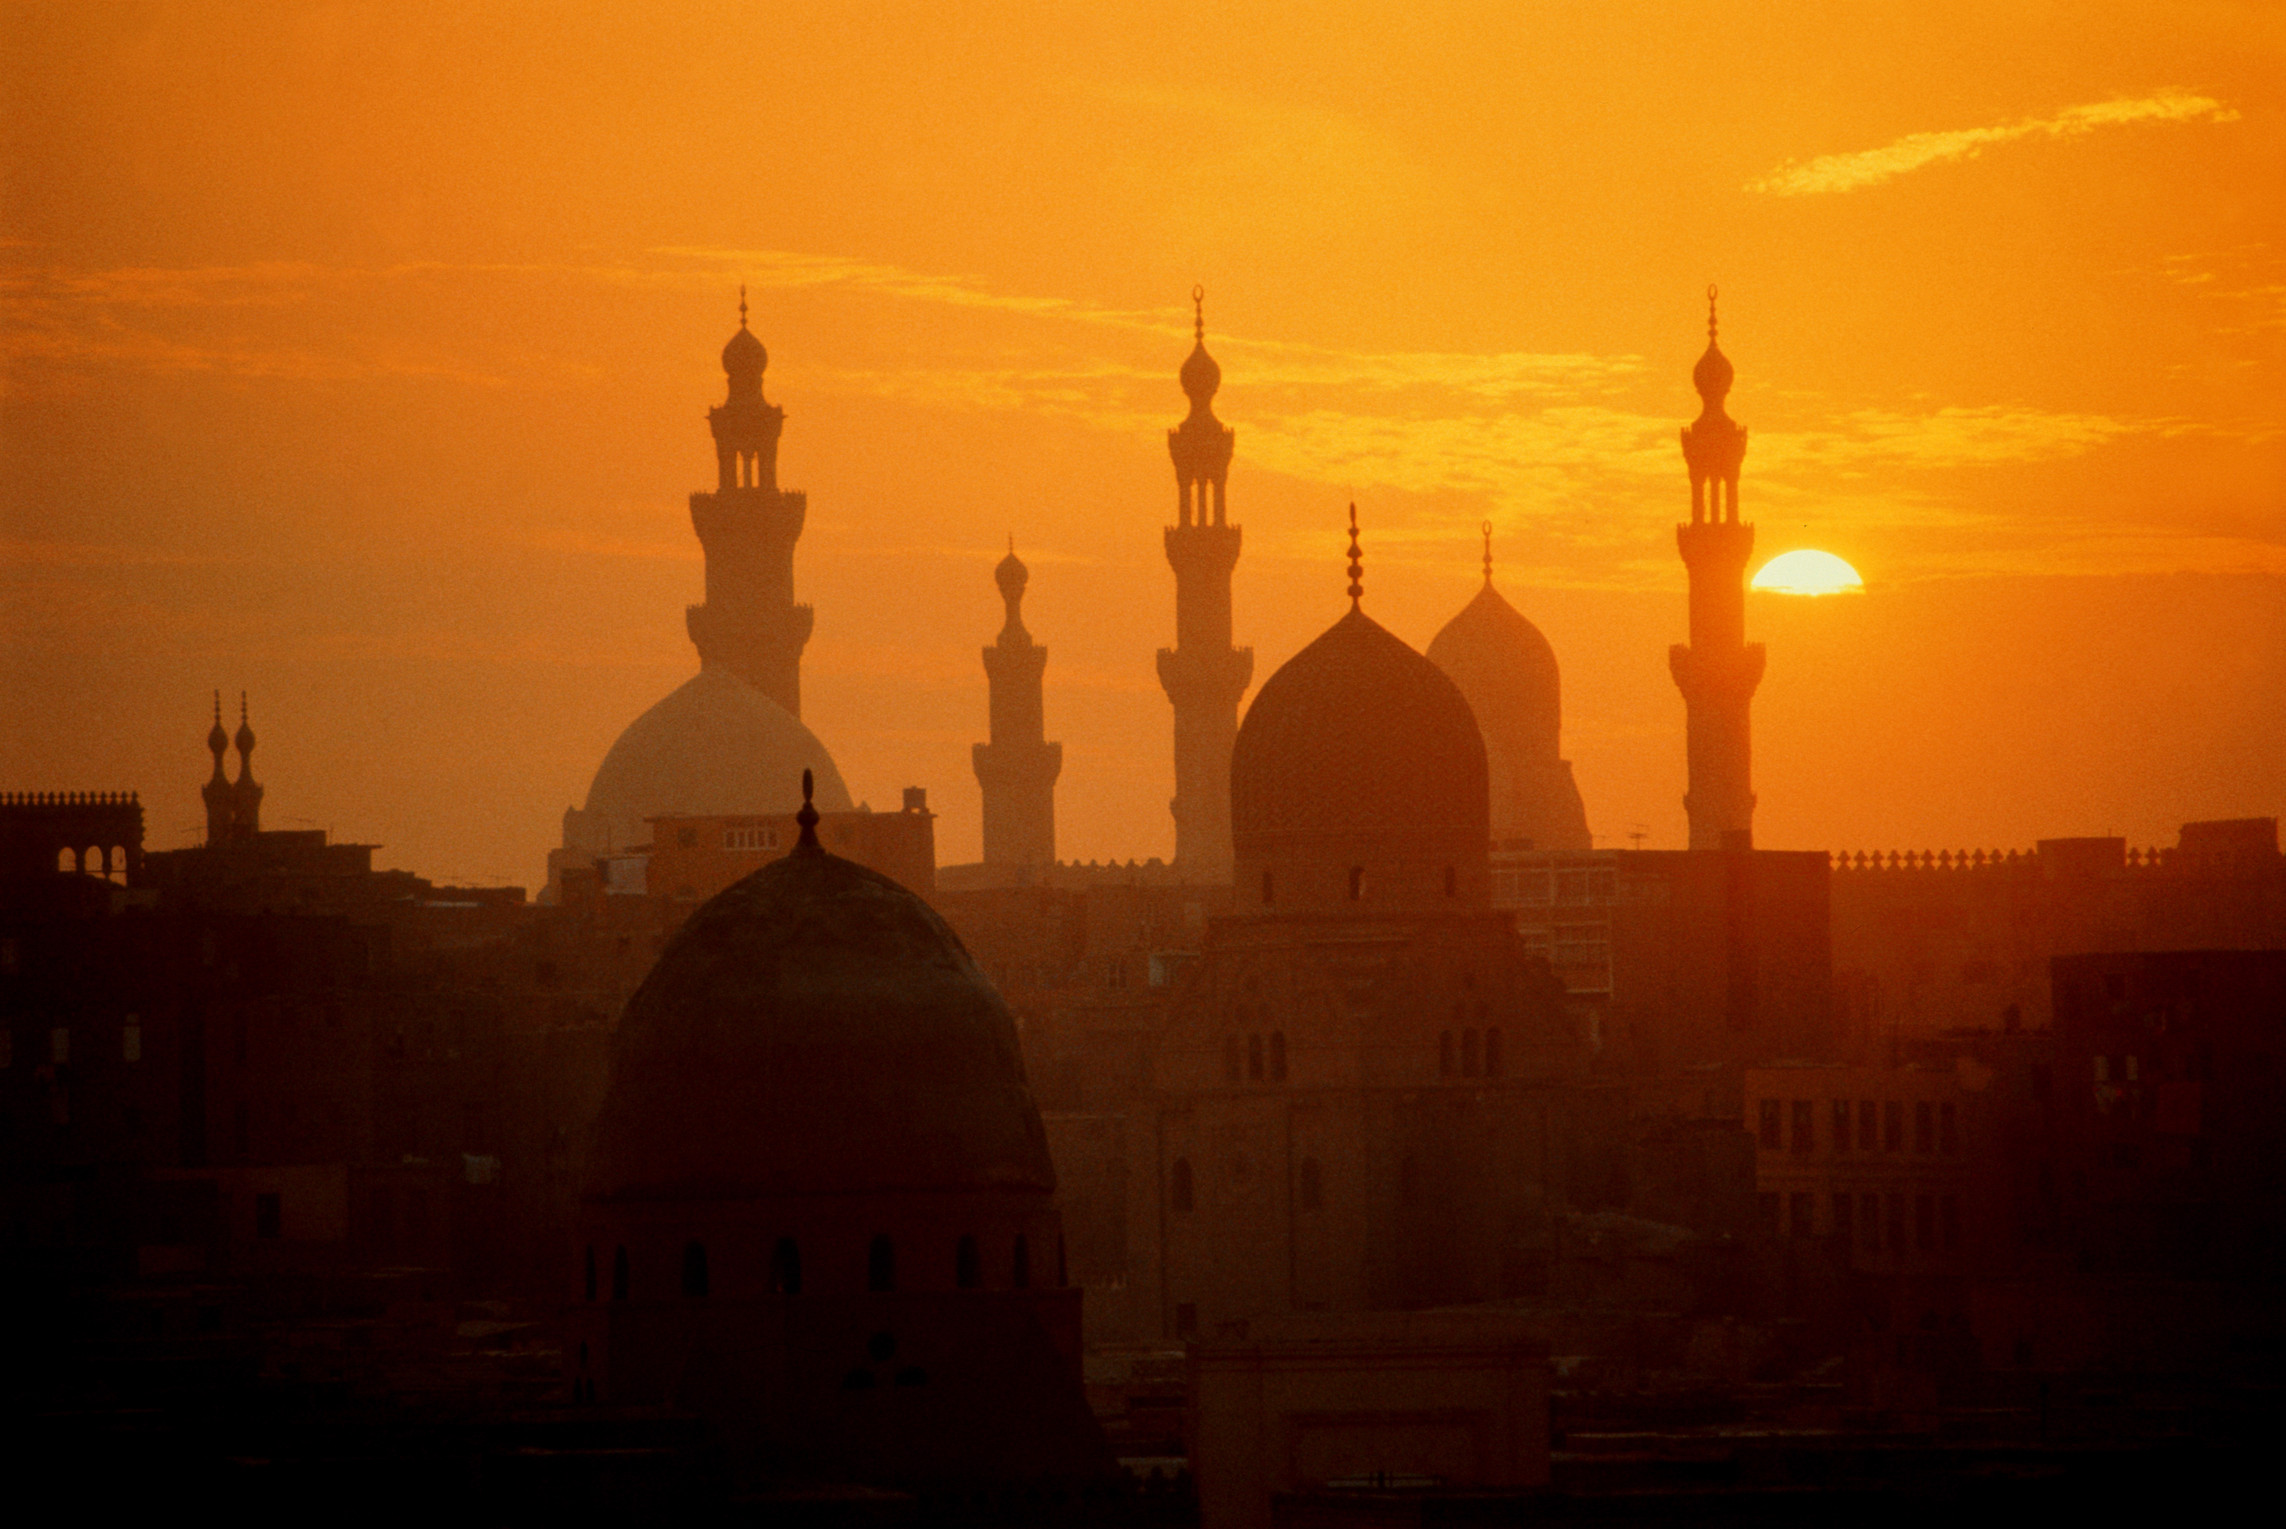 Cairo skyline at sunset